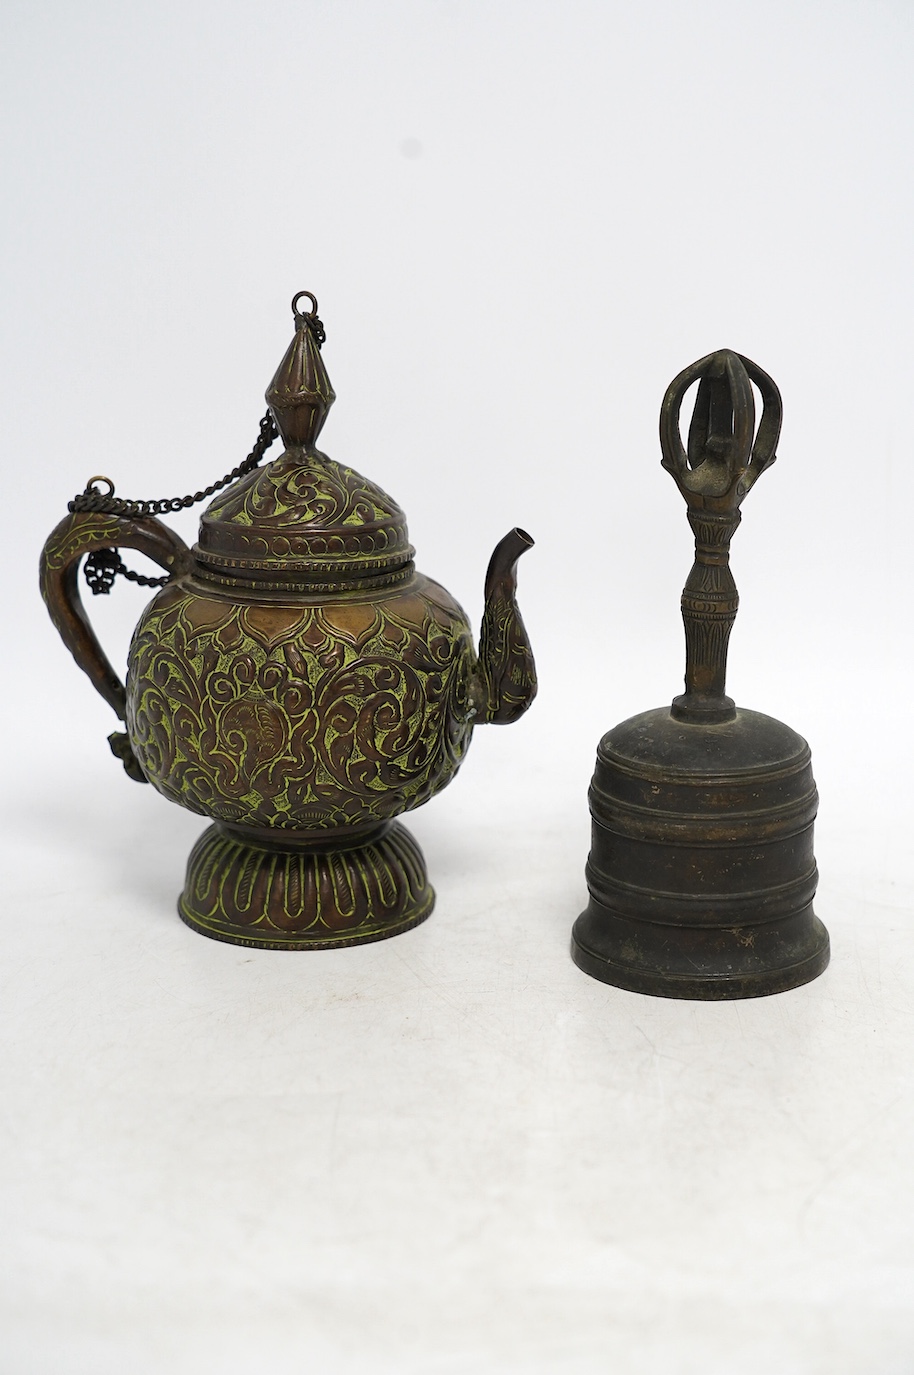 A 19th century Tibetan bronze ghanta bell and a 19th century Tibetan repousse copper teapot, tallest 18cm. Condition - fair to good